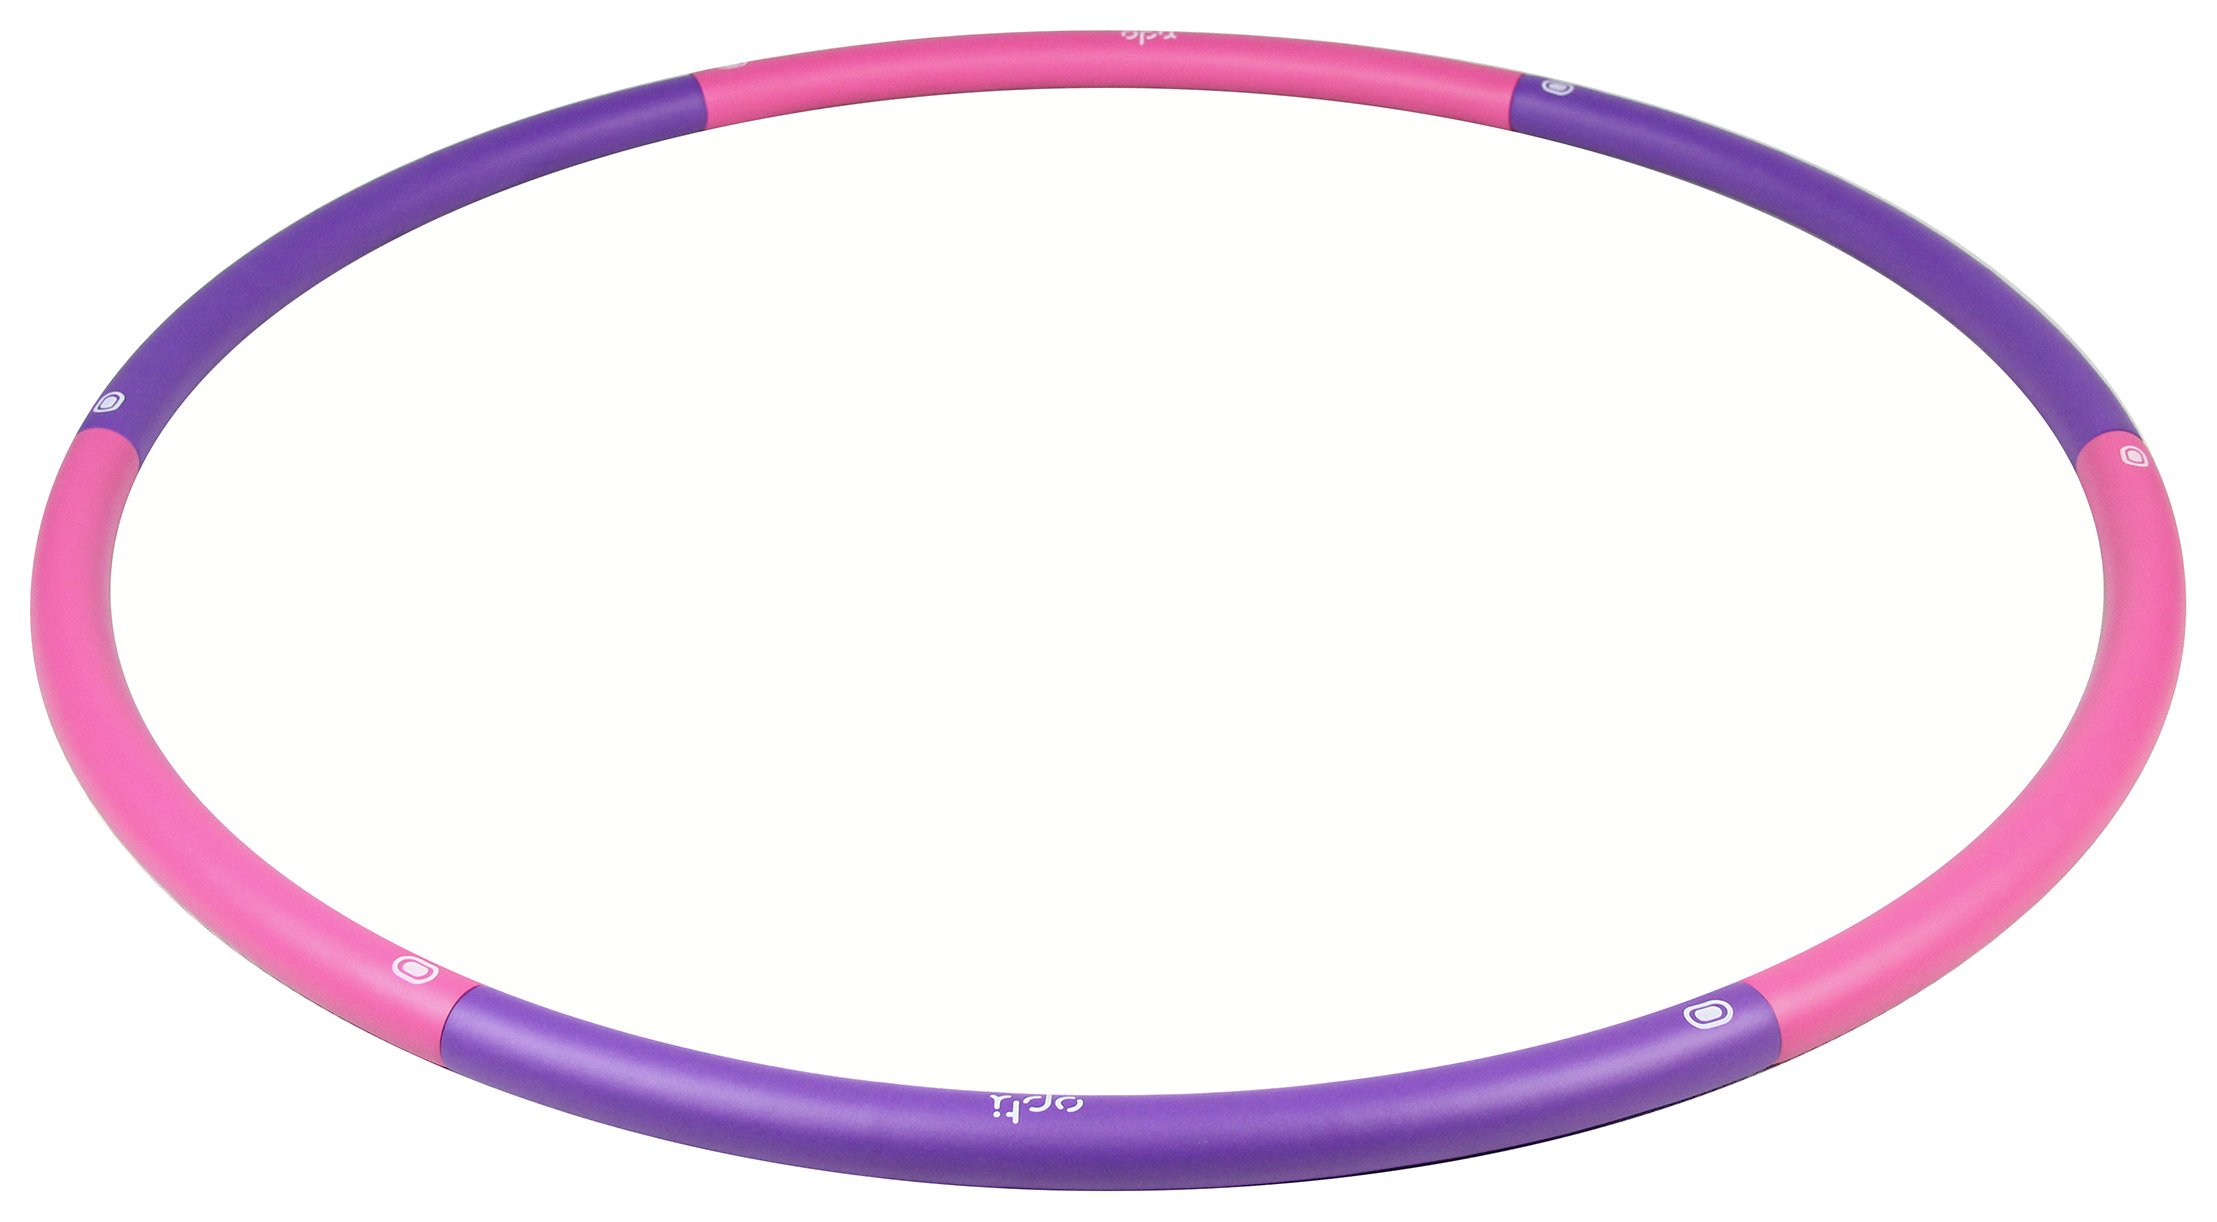 where to buy hula hoop